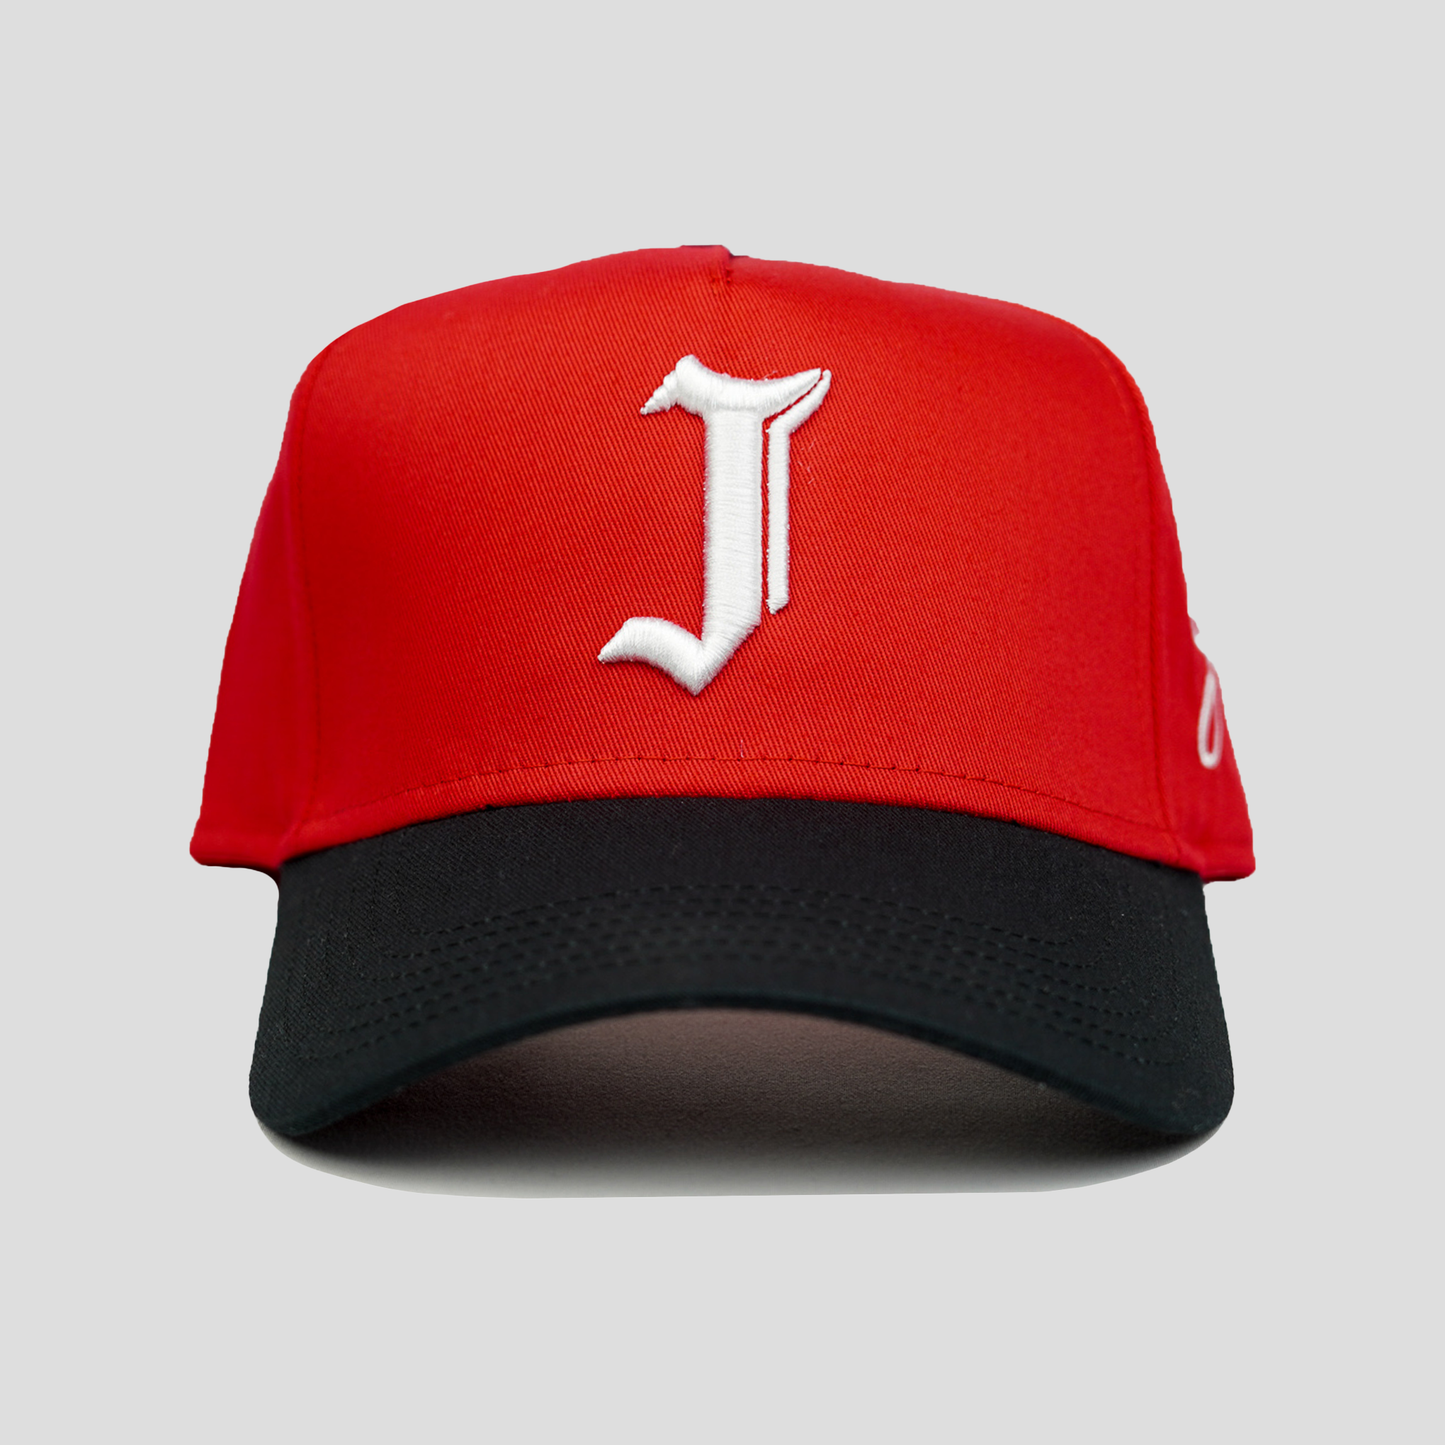 "J" Signature Snapback Hat (RED/BLACK)